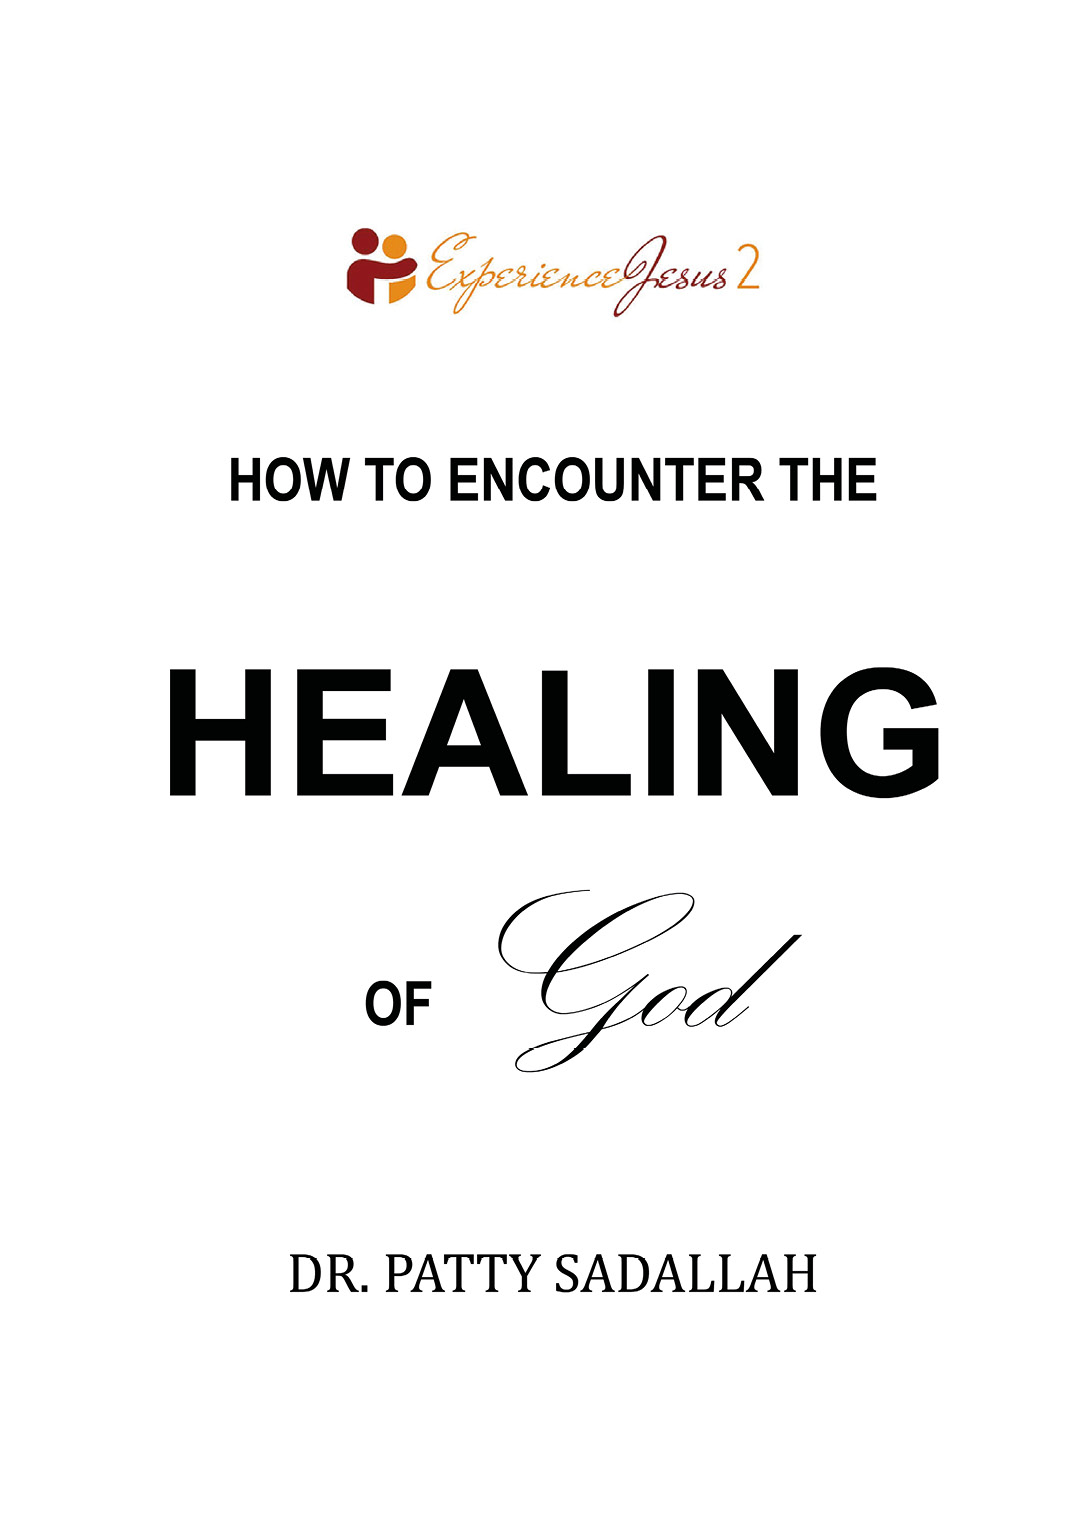 Copyright 2020 by Dr Patty Sadallah Encountering the HEALING of God - photo 2